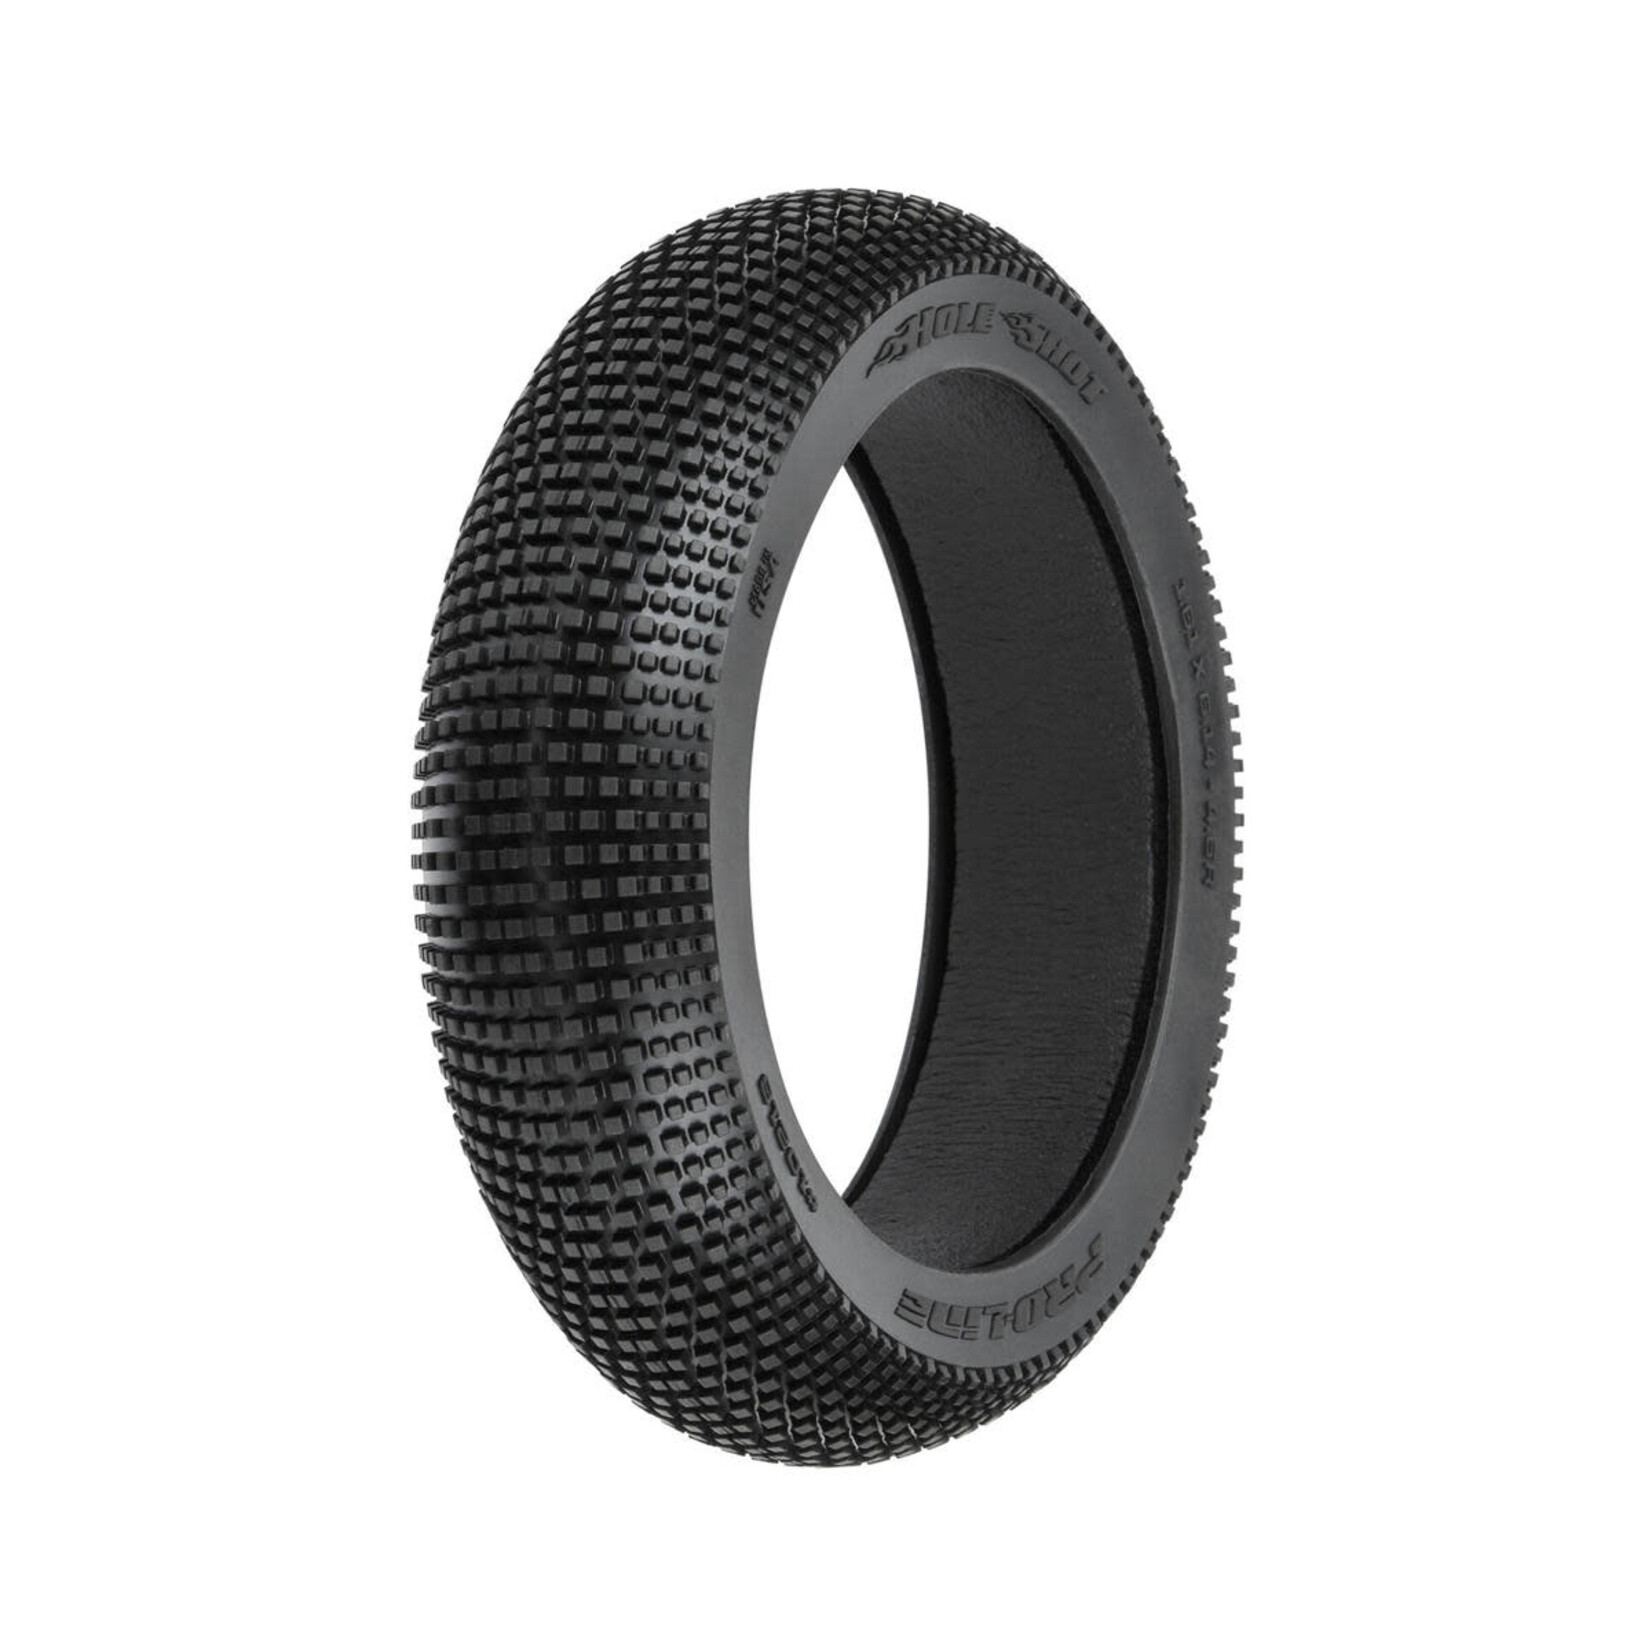 Pro-Line Pro-Line 1/4 Hole Shot Motocross Rear Tire (1) (M3) #10216-02